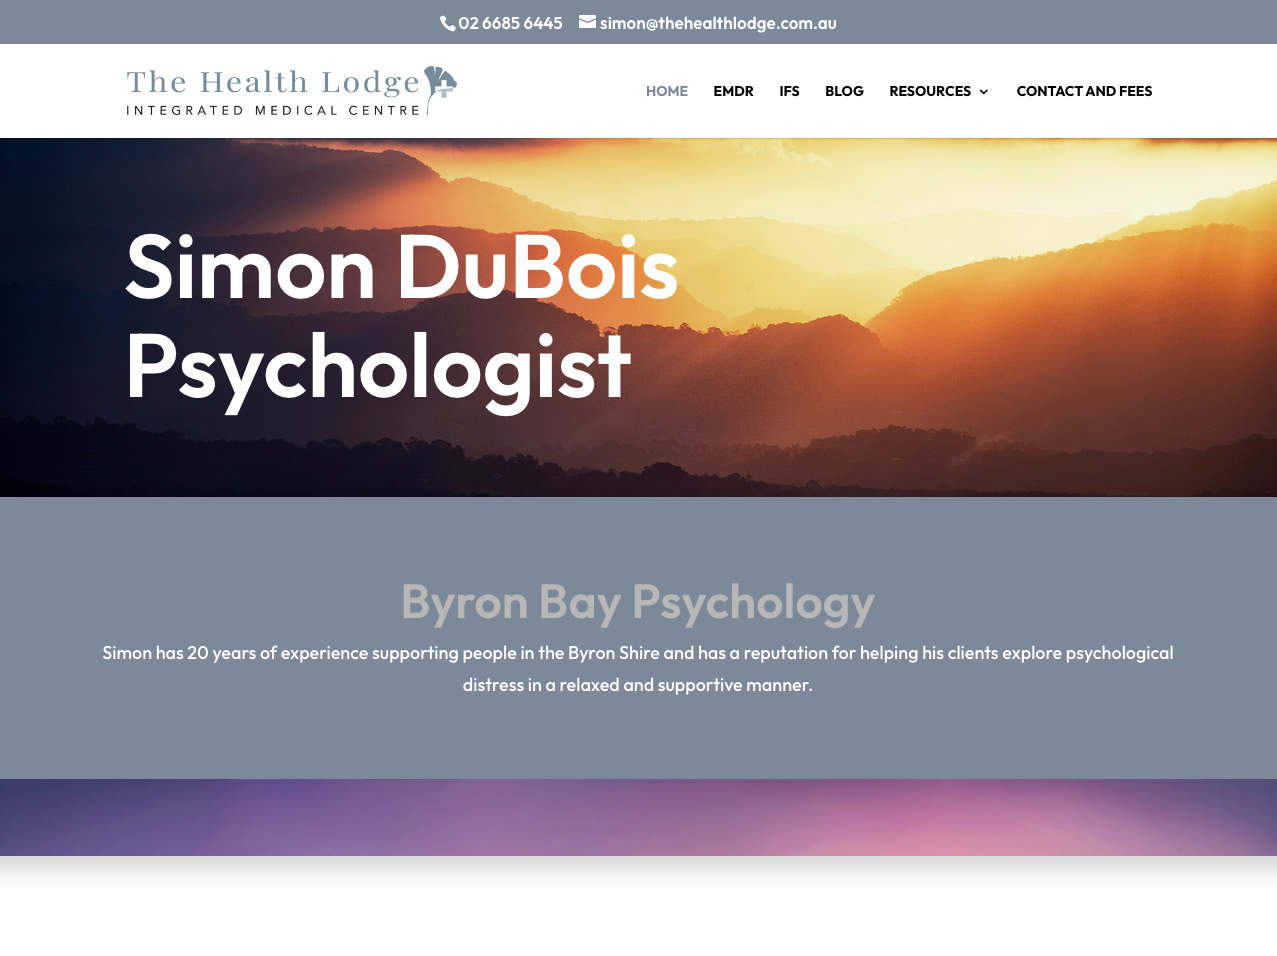 Simon DuBois Psychologist